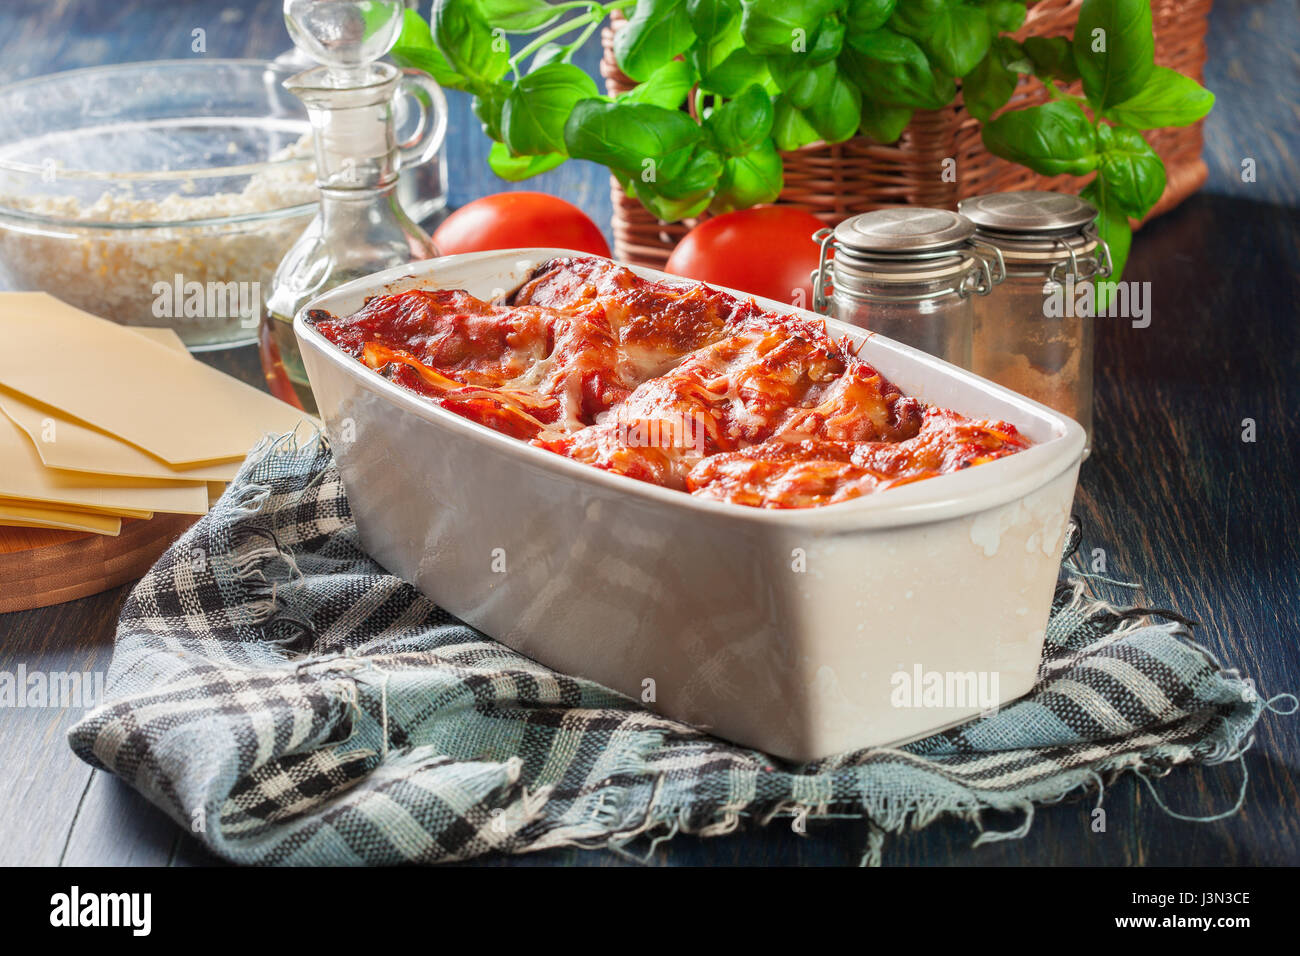 Hot tasty lasagna with spinach in ceramic casserole dish. Italian cuisine. Stock Photo